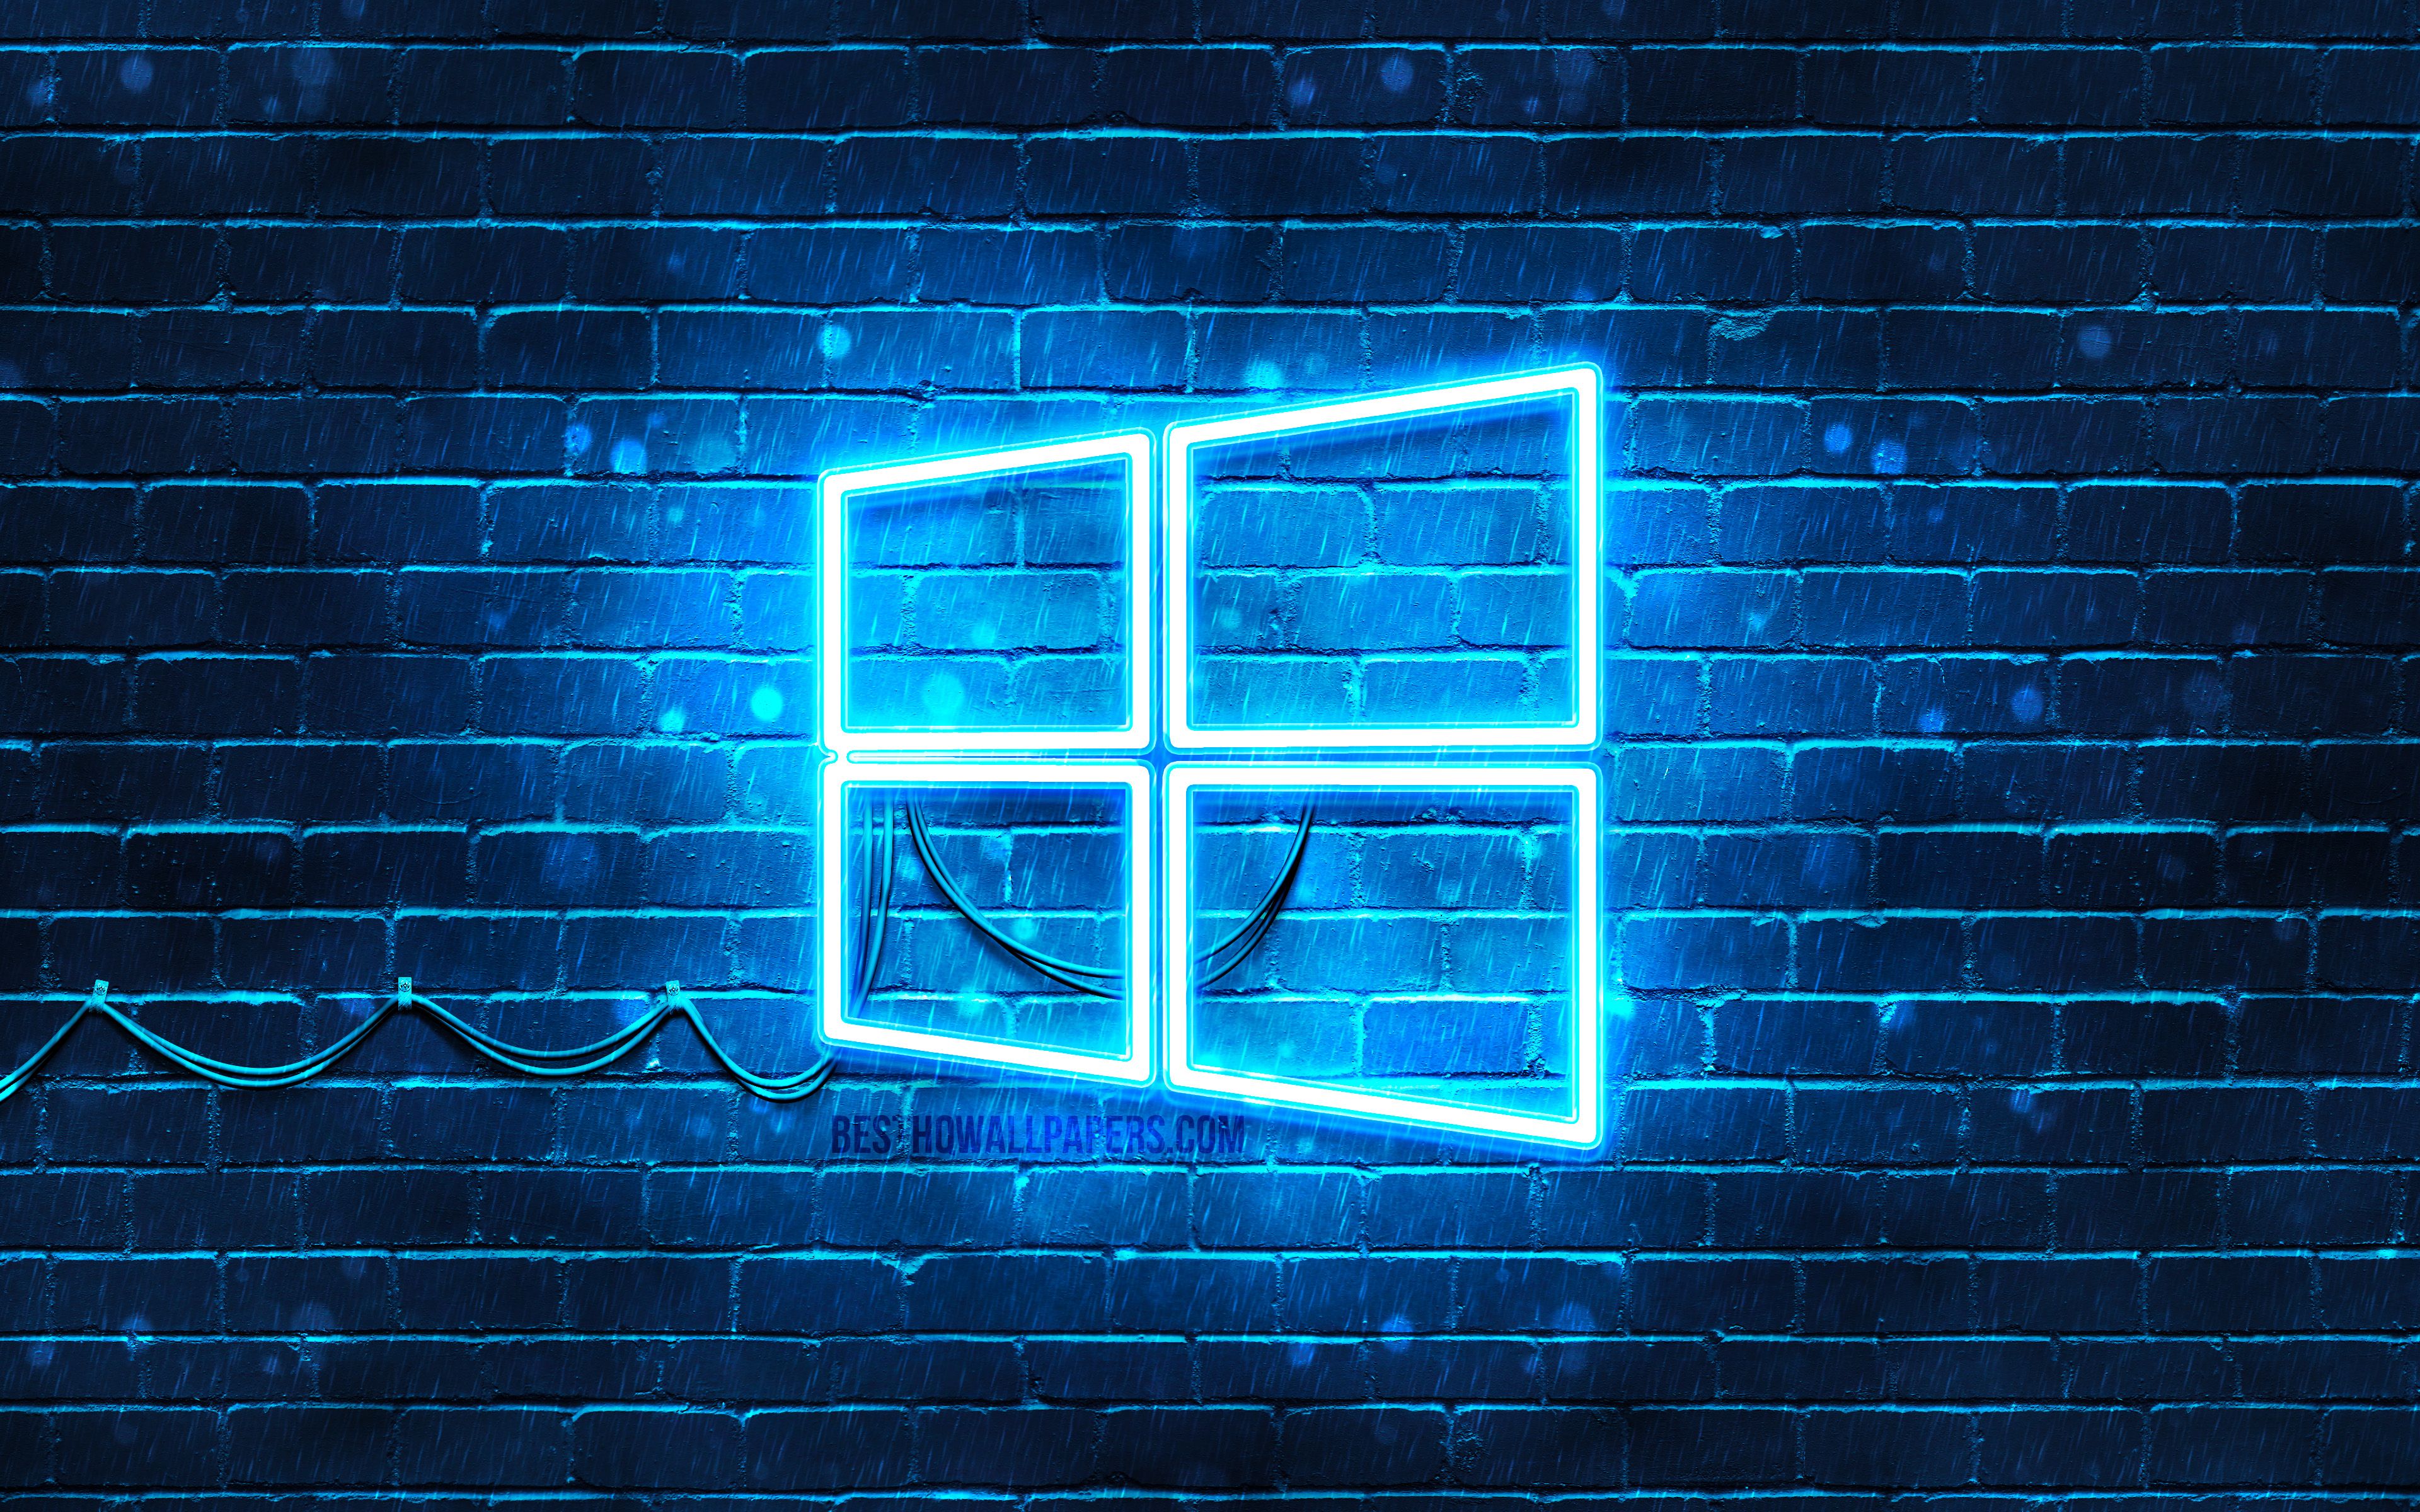 Download wallpapers Windows 10 blue logo, 4k, blue brickwall, Windows 10 lo...